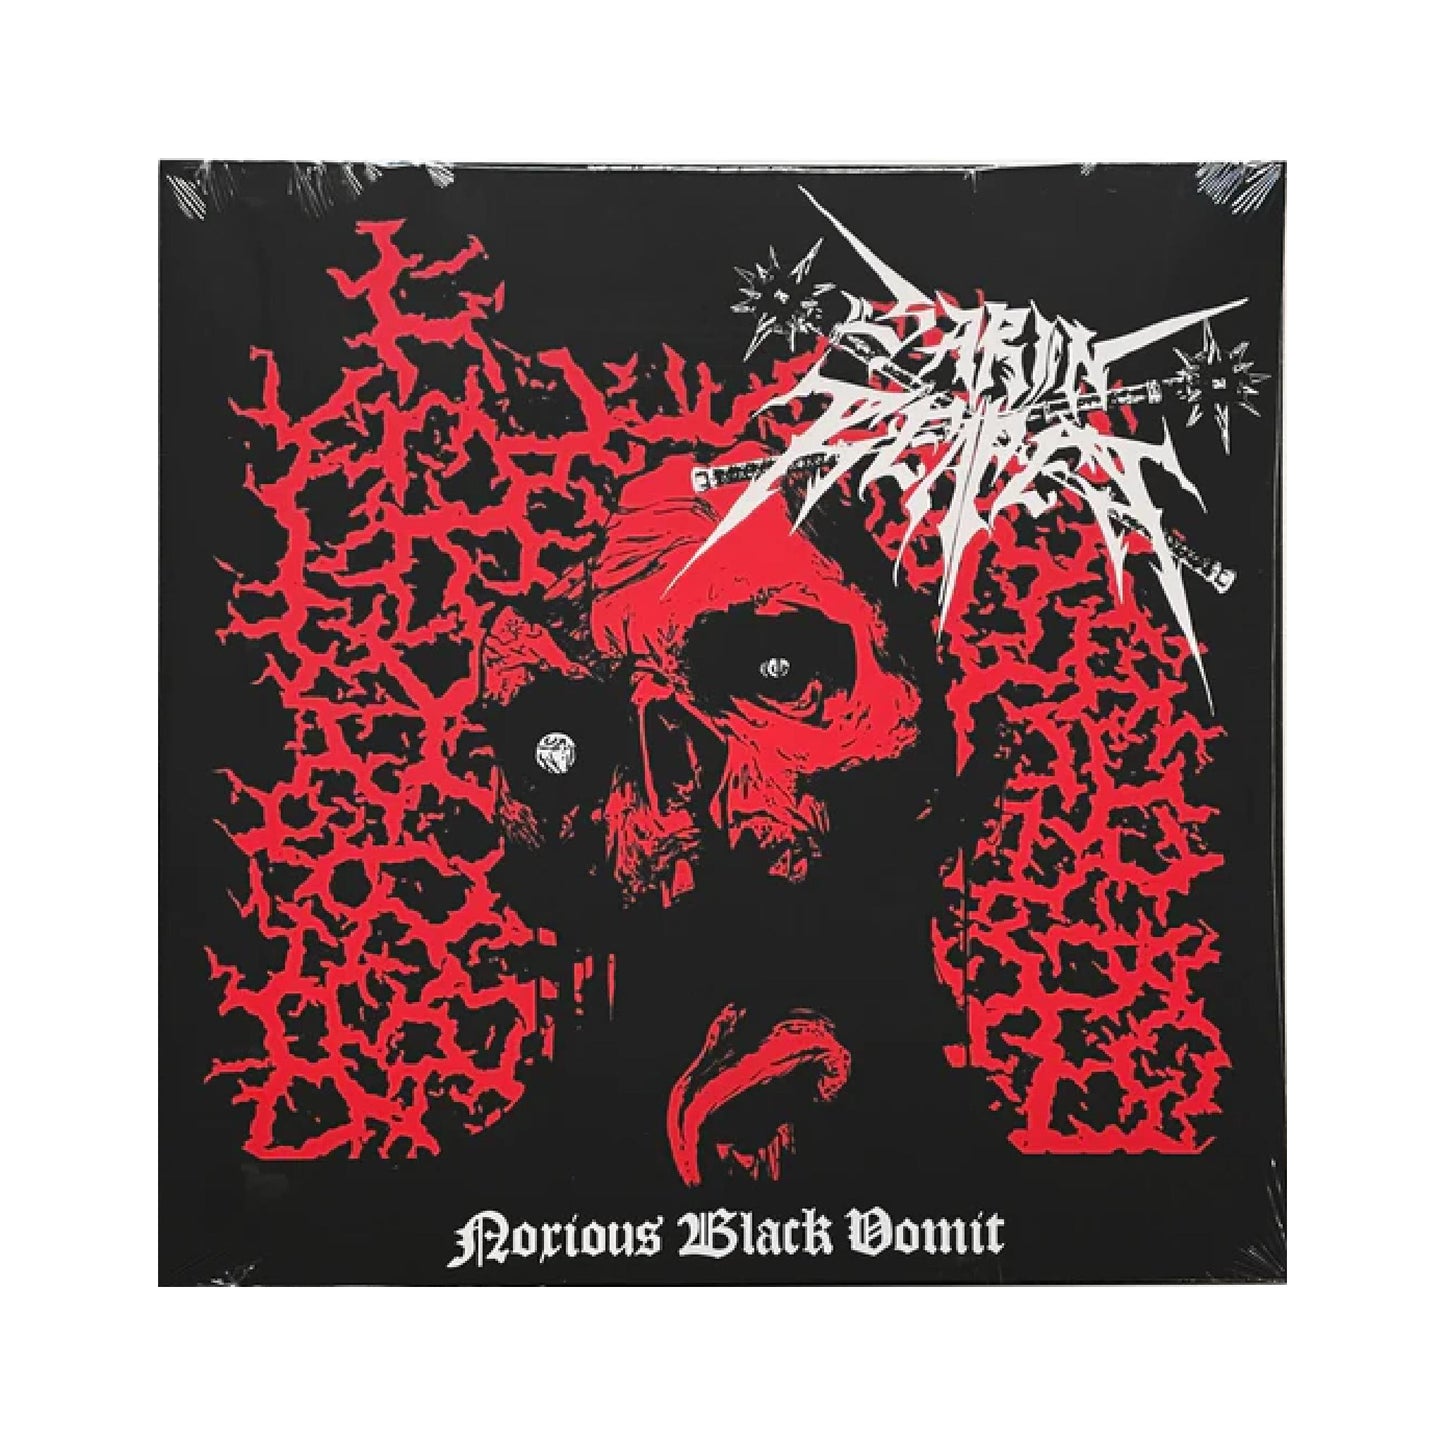 Sarin Reaper – Noxious Black Vomit LP 12" (color vinyl)